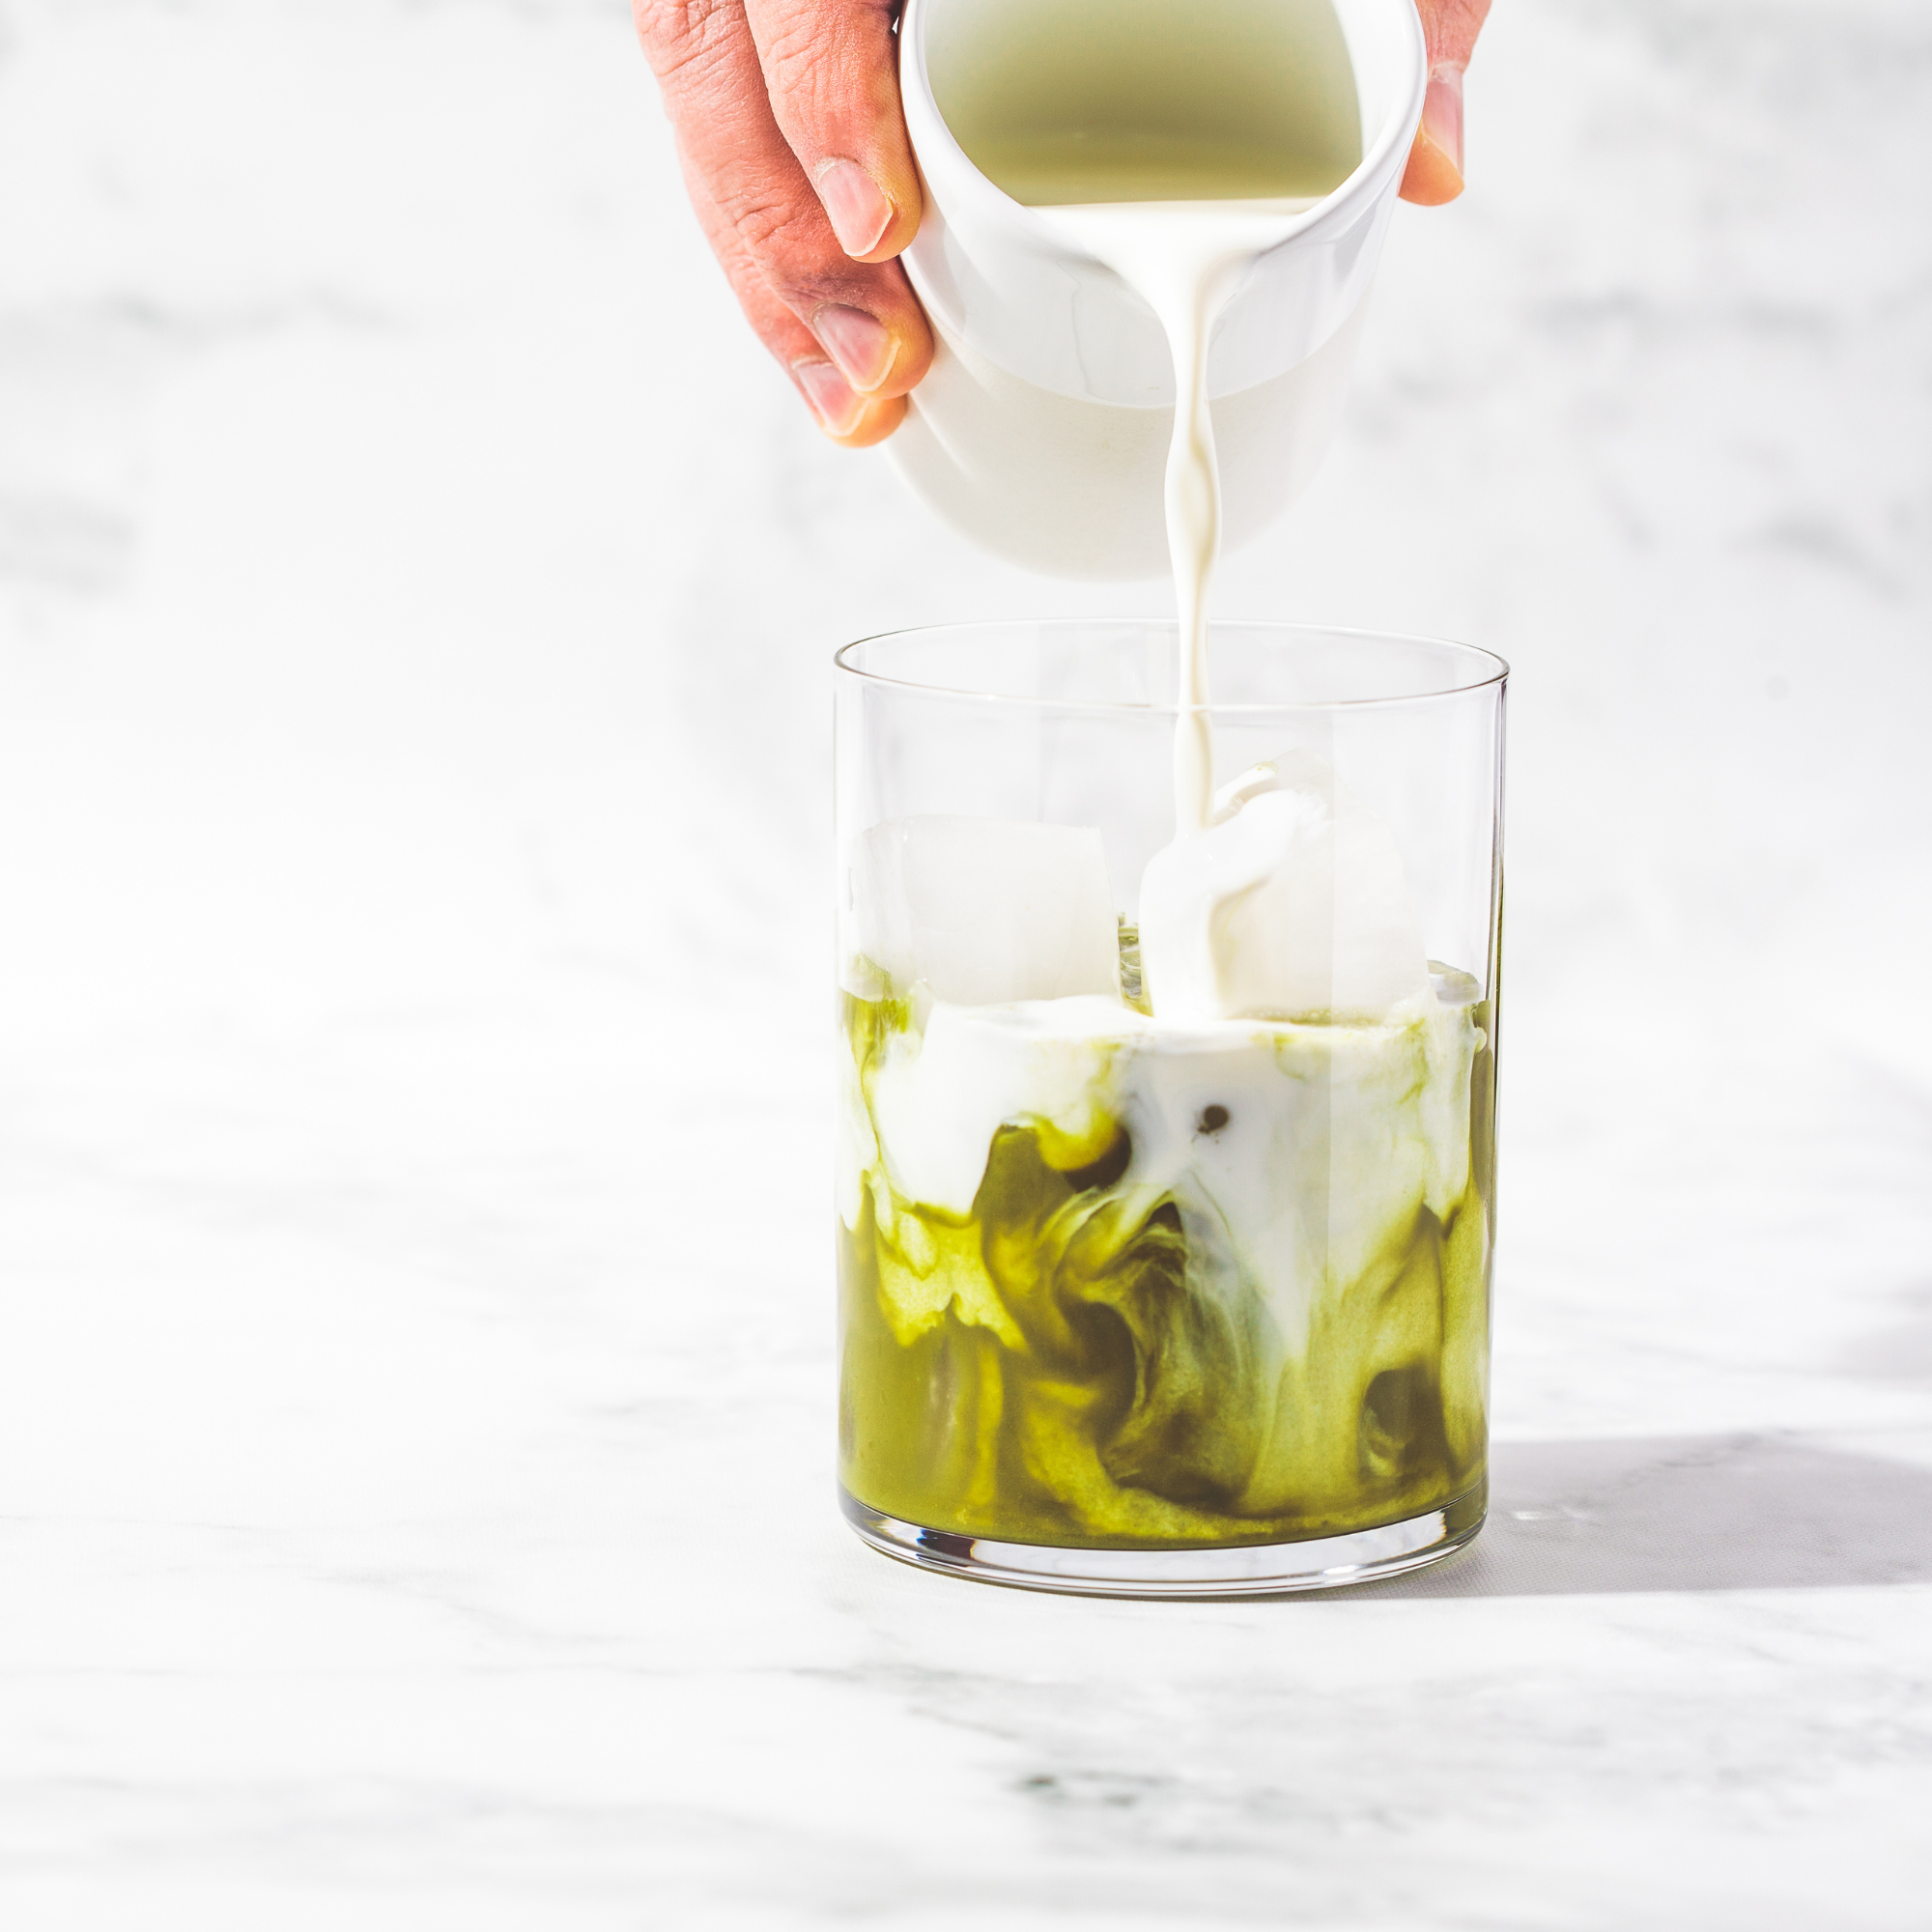 50g Organic Culinary Matcha Tea